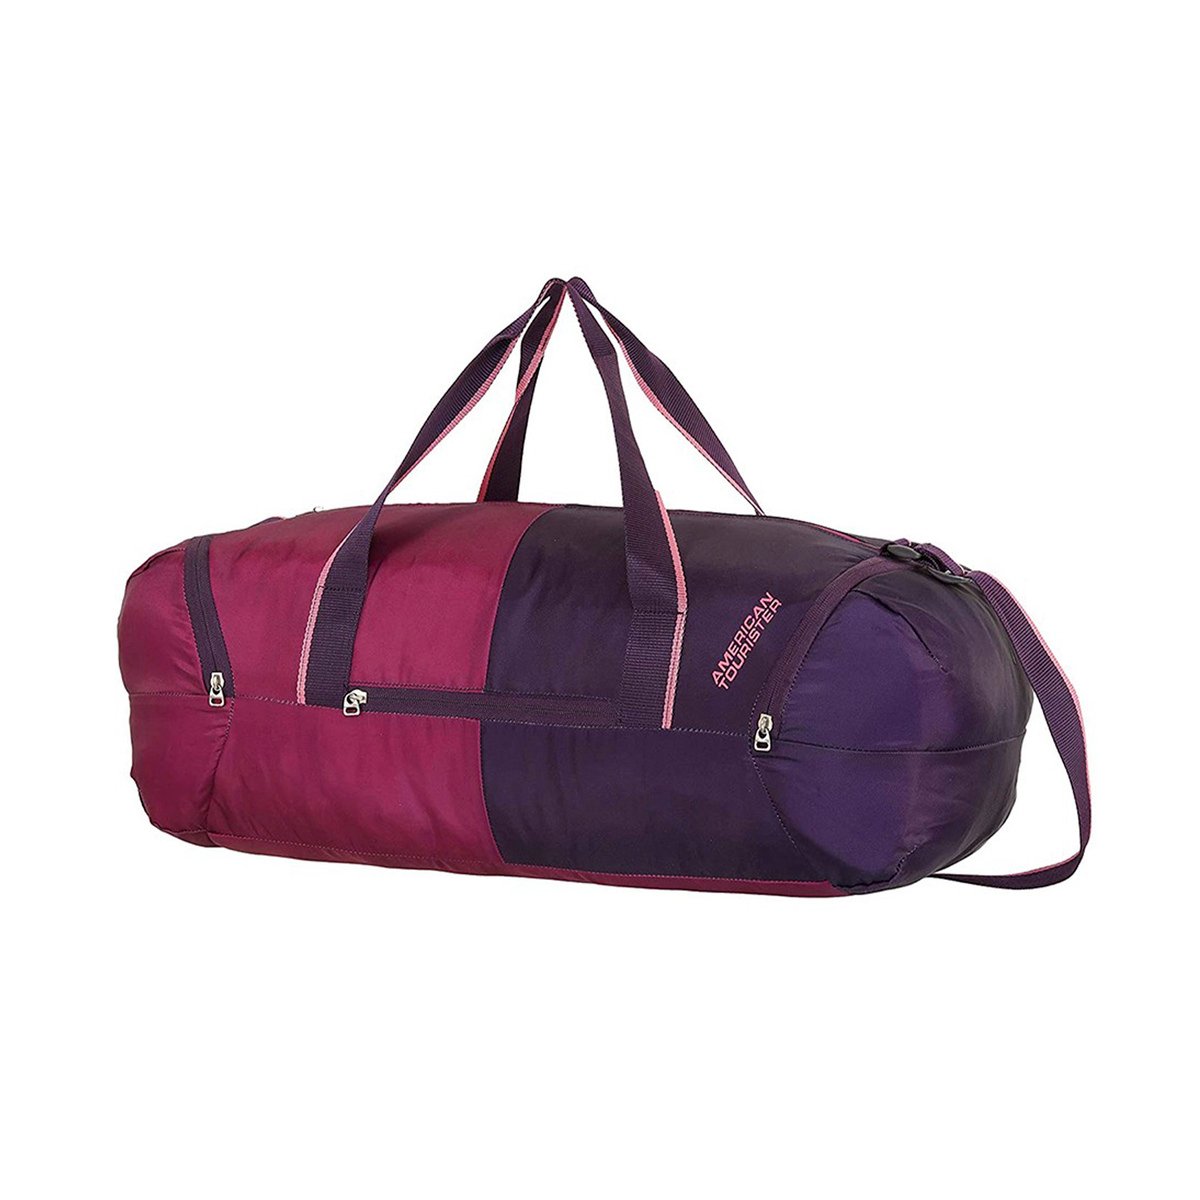 American Tourister Flair Duffle Bag, 53 cm, Purple